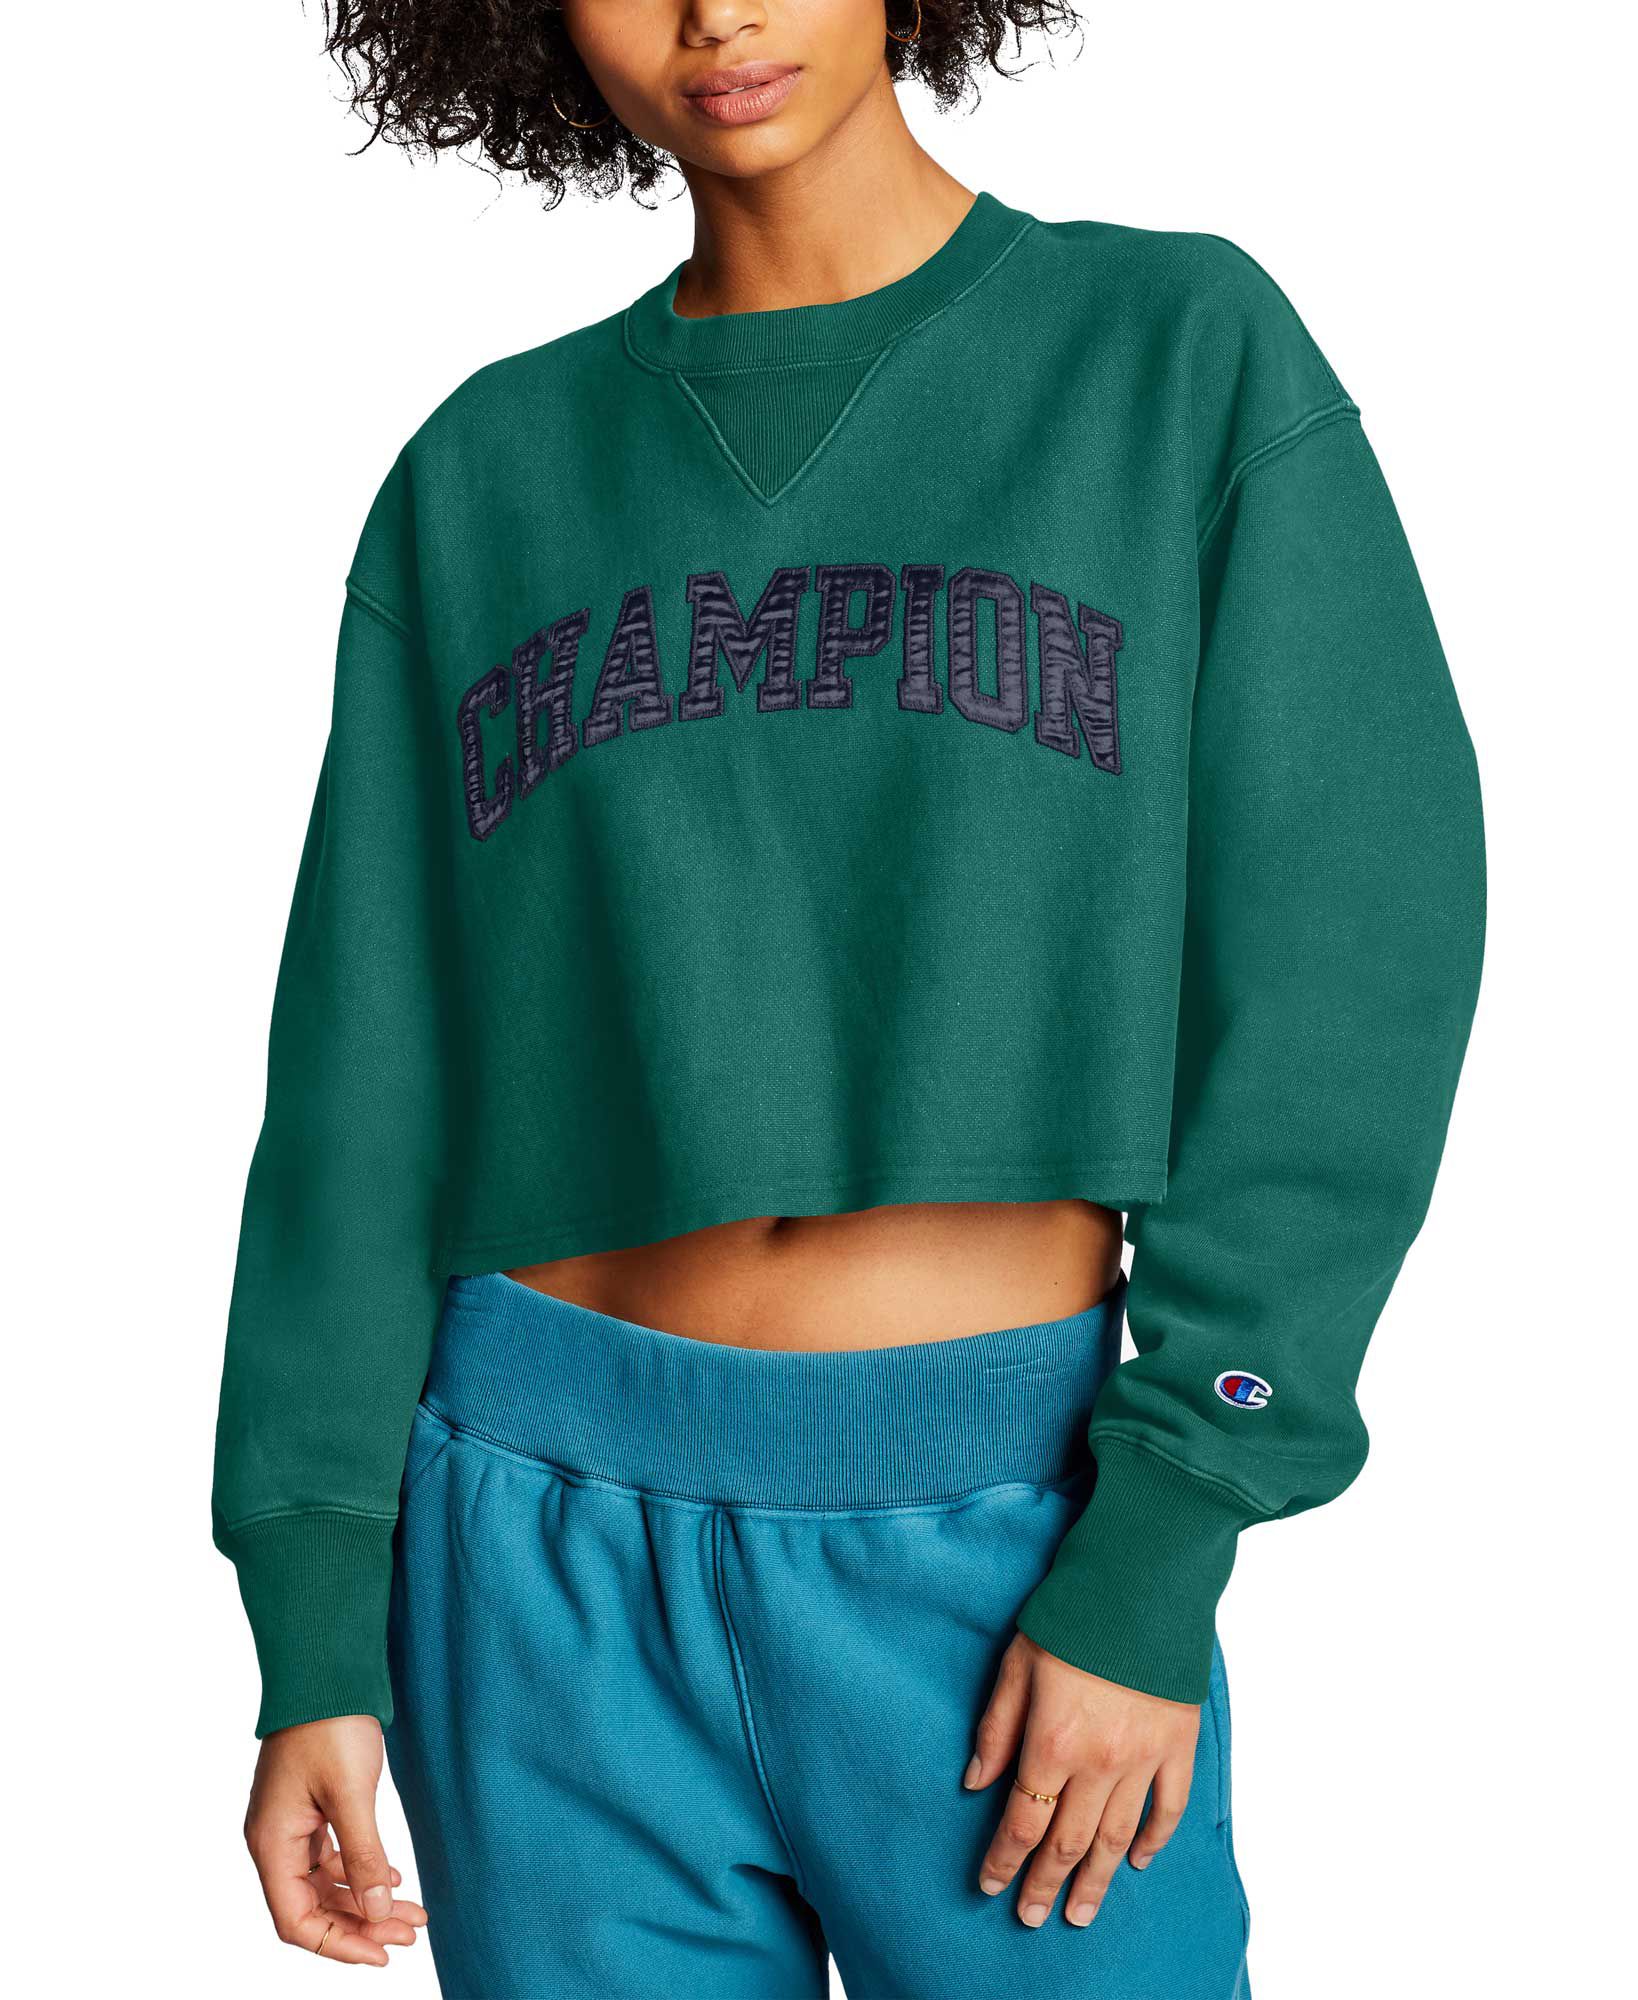 champion green sweatshirt womens